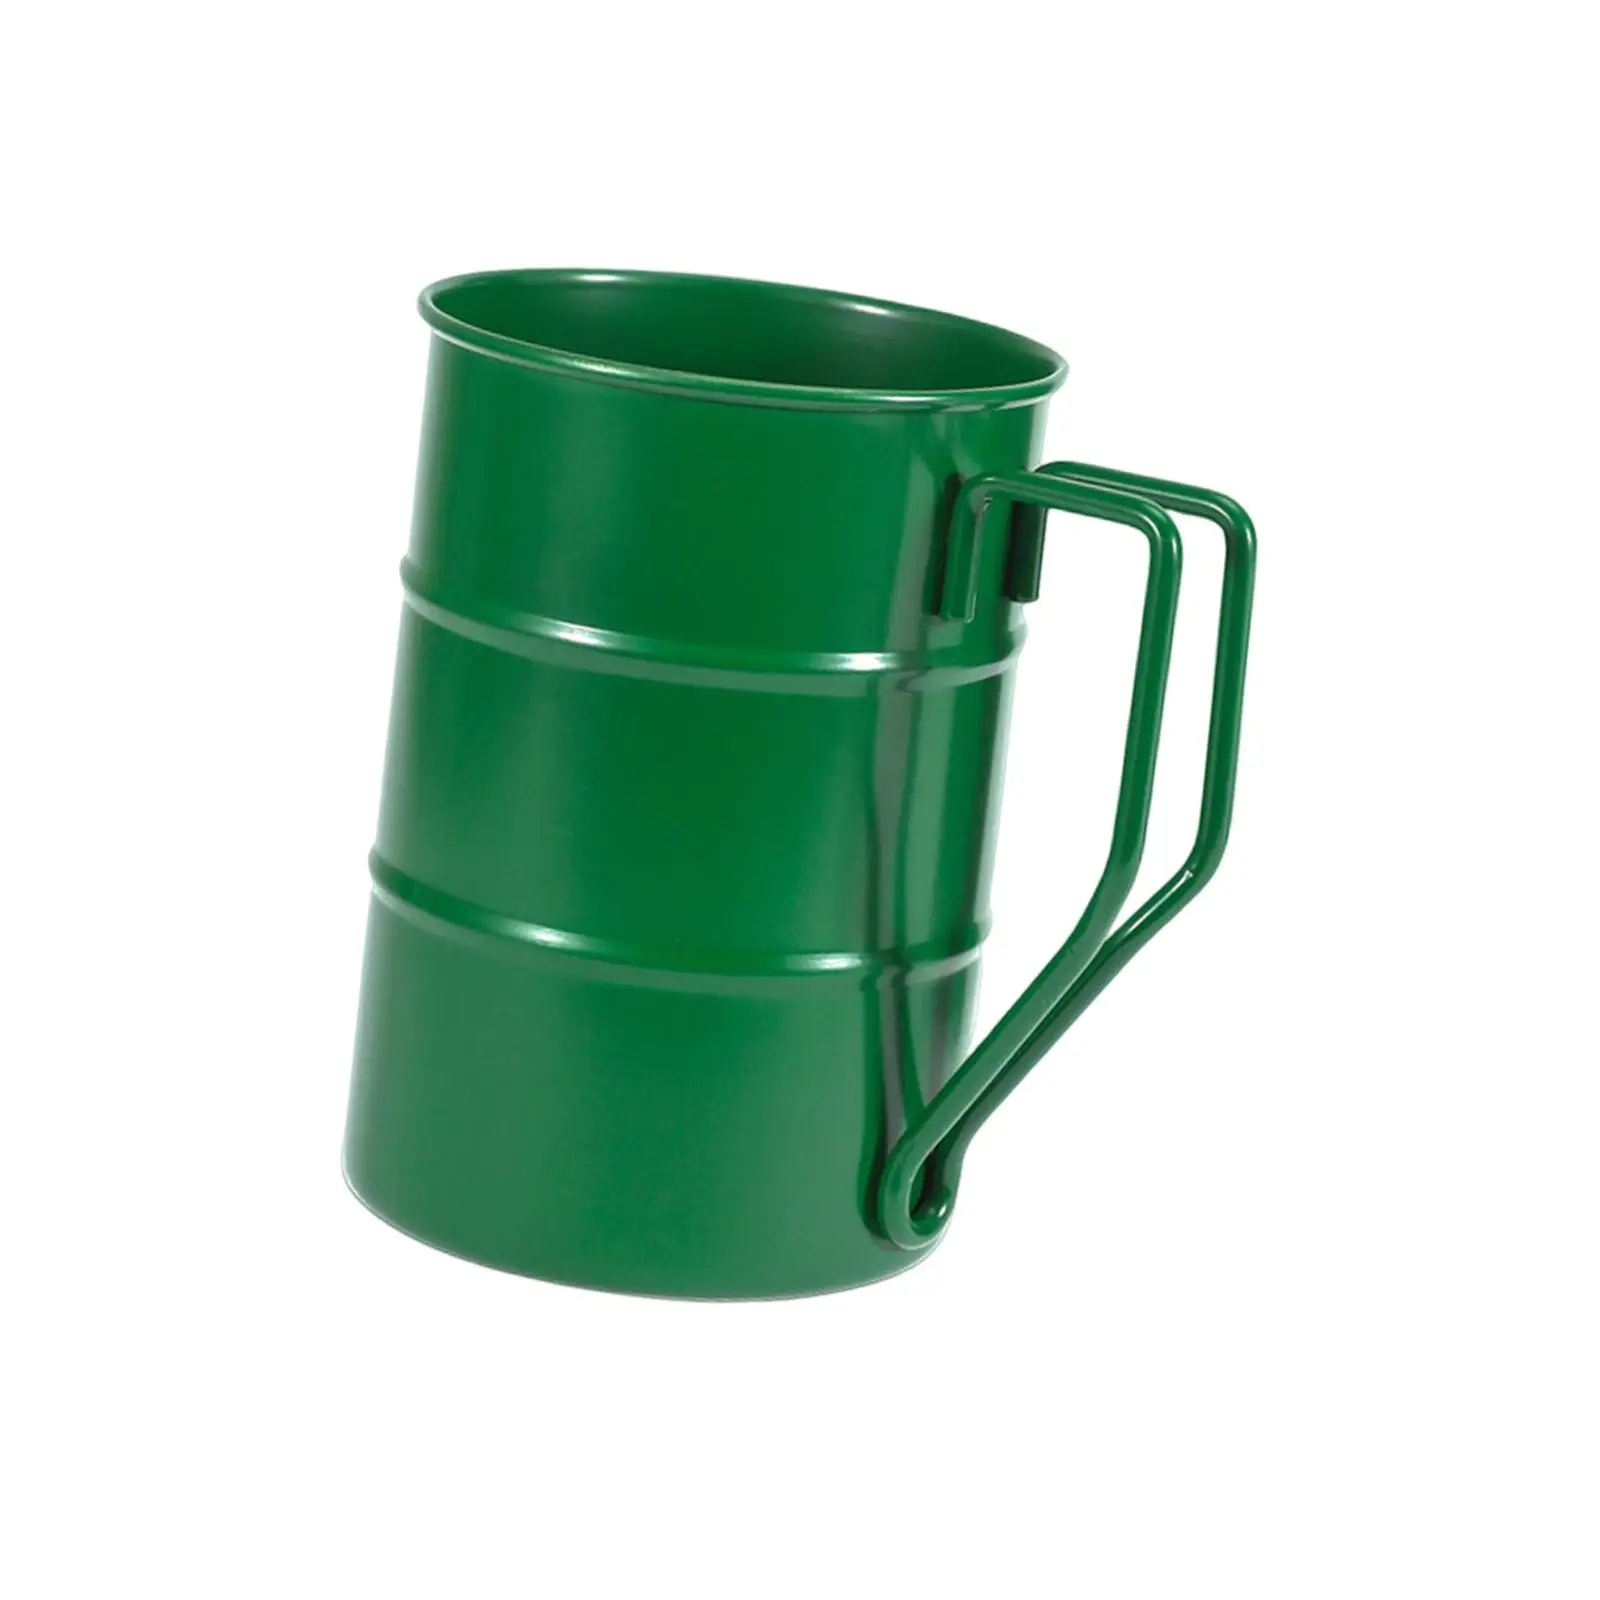 Stainless Steel Camping Mug Multifunctional Tableware Pot coffee Mug Beer Mug for Picnic Travel Garden Backpacking Hiking